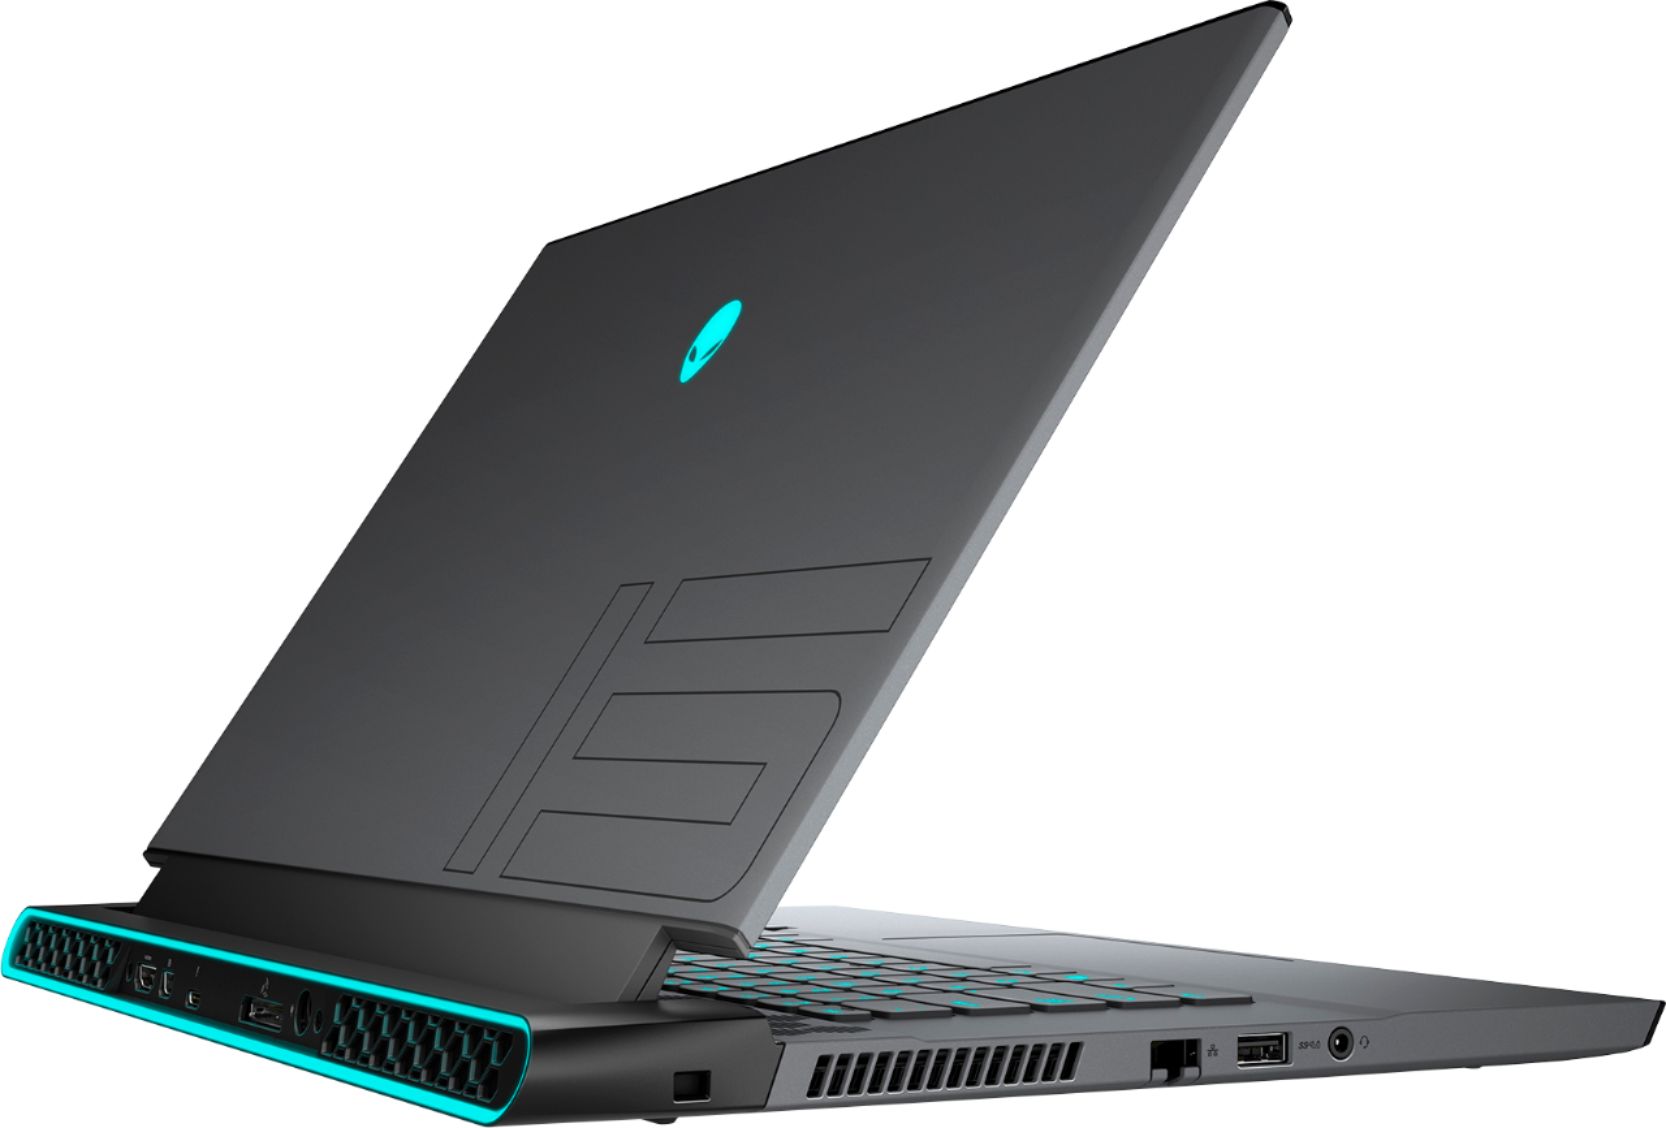 Dell Alienware m15 R3 Gaming and Entertainment Laptop (Intel i7-10750H 6-Core, 16GB RAM, 1TB PCIe SSD, 15.6" Full HD (1920x1080), NVIDIA RTX 2070 Super, Wifi, Bluetooth, Webcam, 3xUSB 3.1, Win 10 Pro) - image 4 of 6